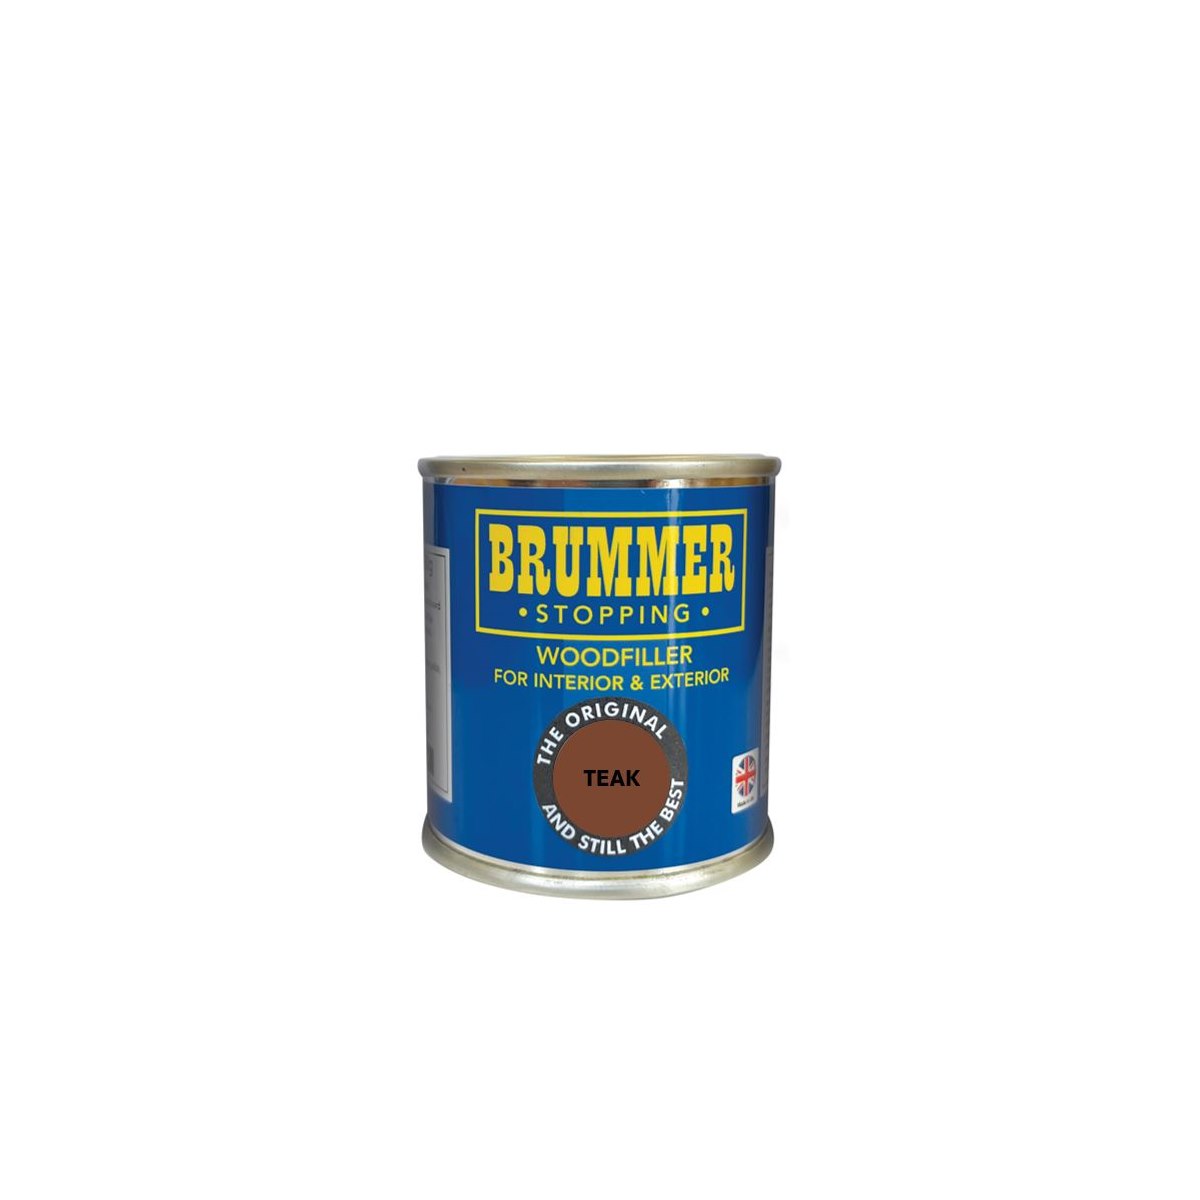 Brummer Woodfiller for Interior and Exteior Use Teak 250g